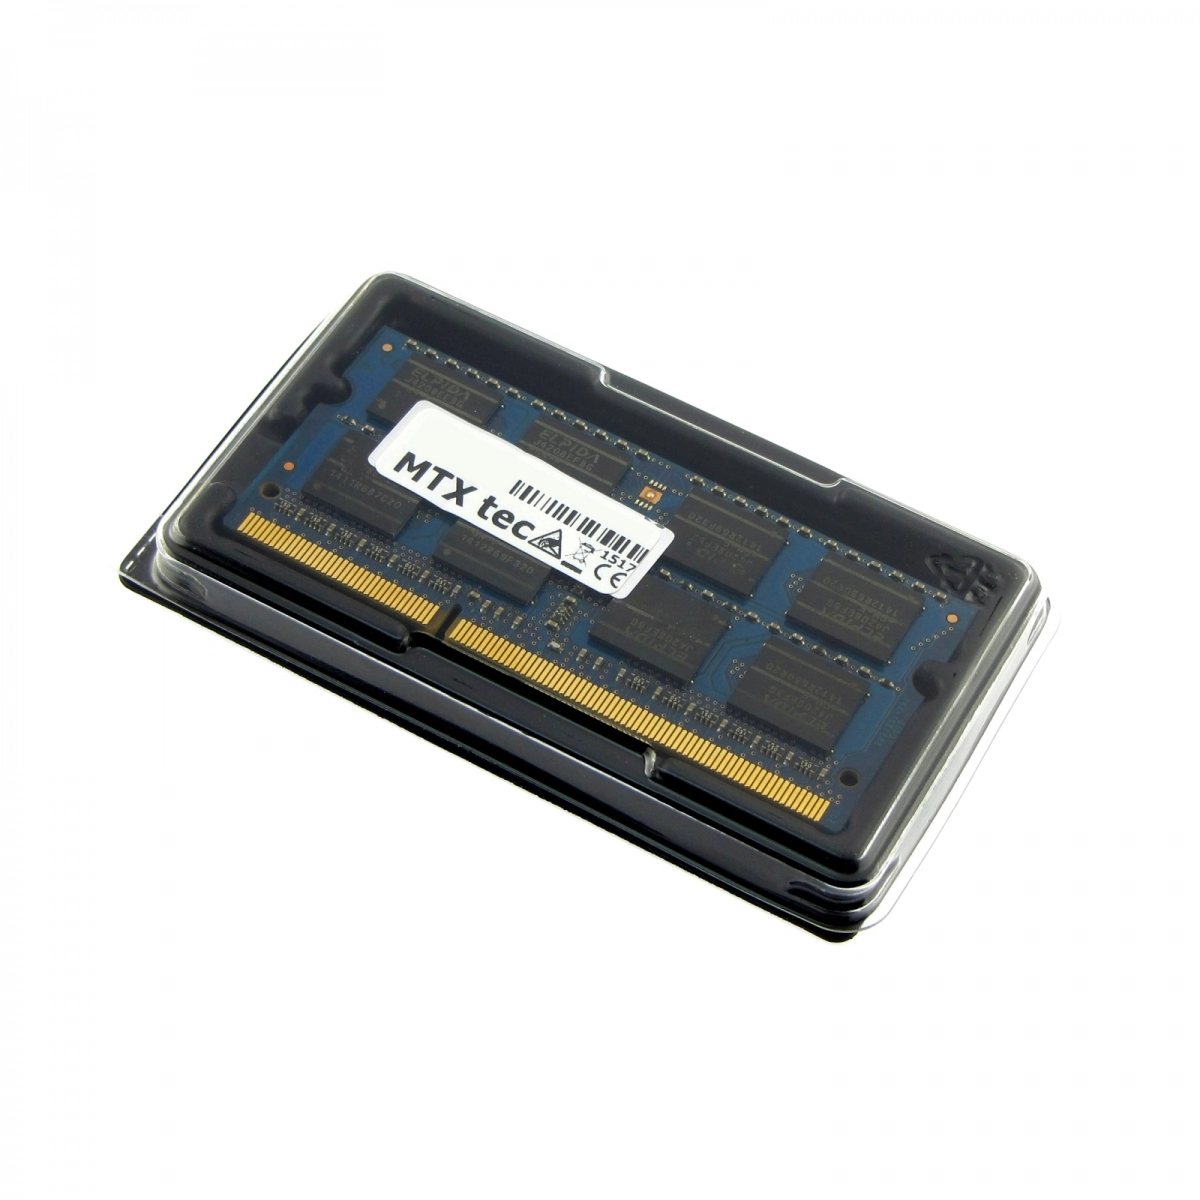 MTXtec Arbeitsspeicher 4 GB RAM für LENOVO ThinkPad SL510 (2875)